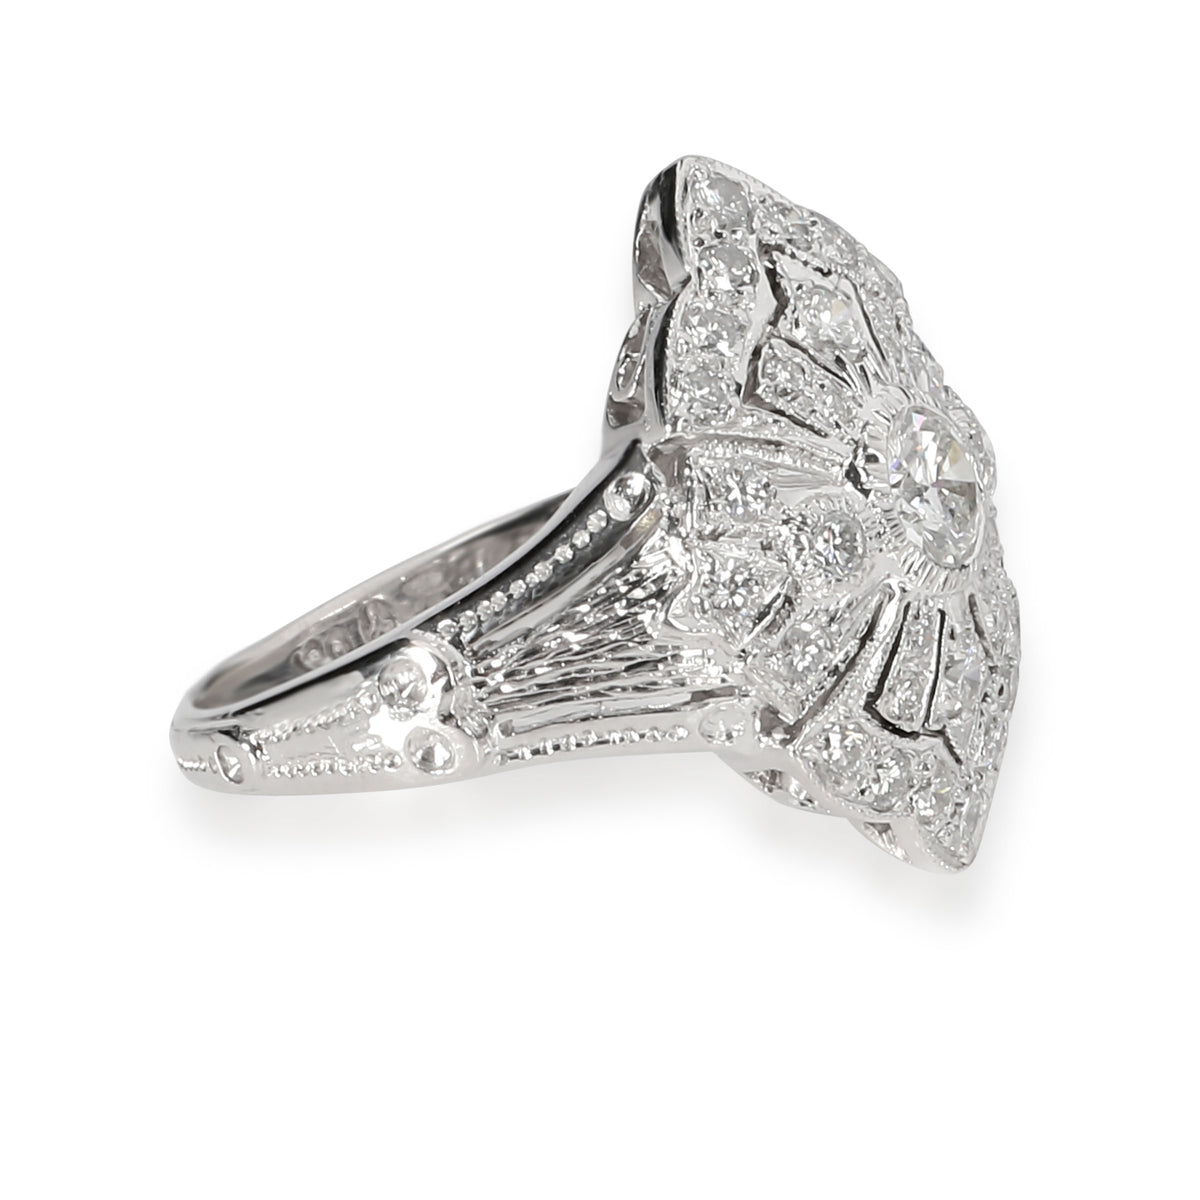 Vintage Inspired Diamond Ring in 18K White Gold 0.50 CTW